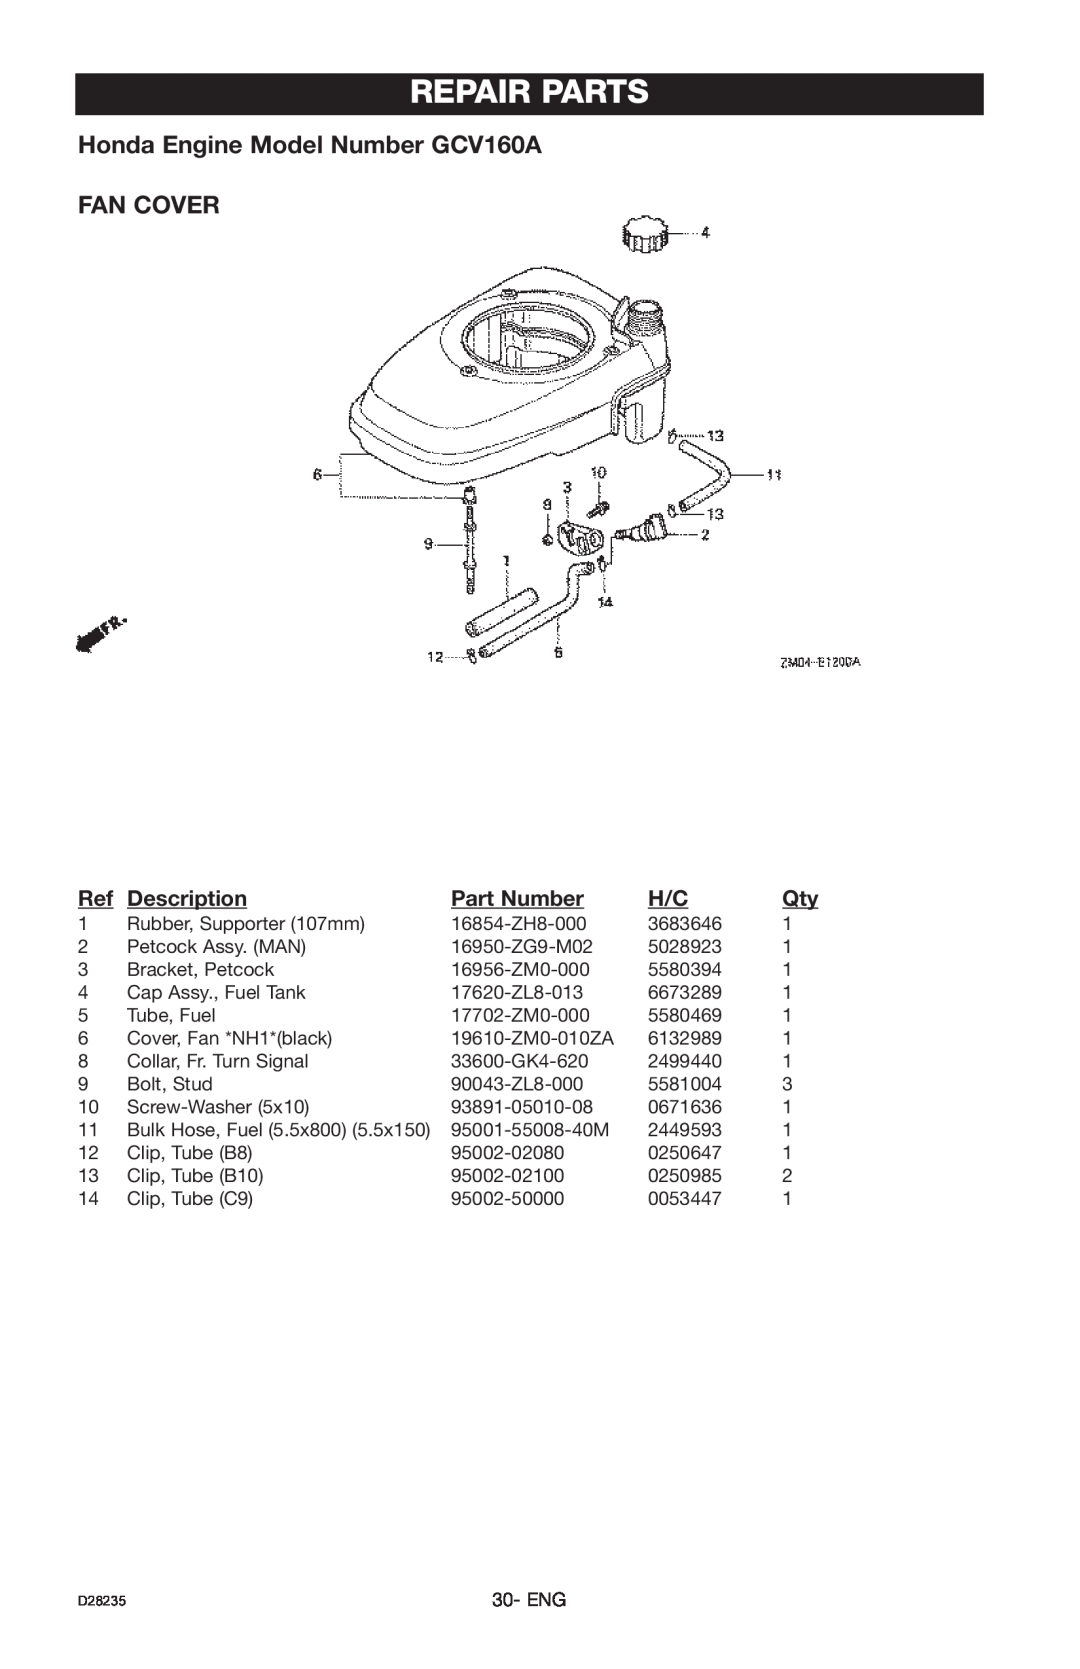 Craftsman D28235, 919.672241 Repair Parts, Honda Engine Model Number GCV160A FAN COVER, Description, Part Number 